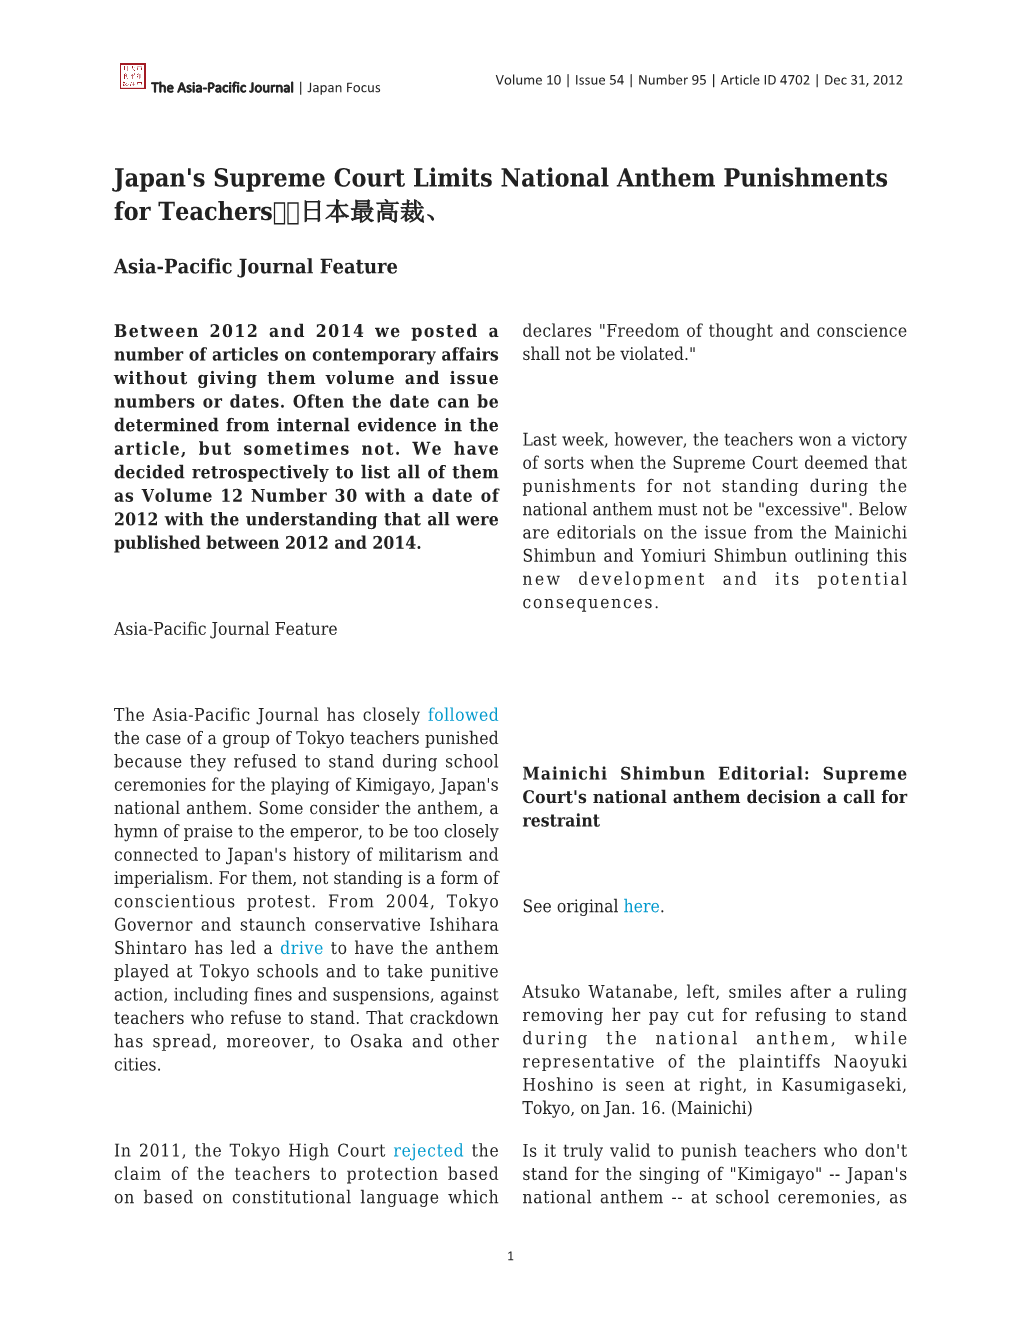 Japan's Supreme Court Limits National Anthem Punishments for Teachers 日本最高裁、